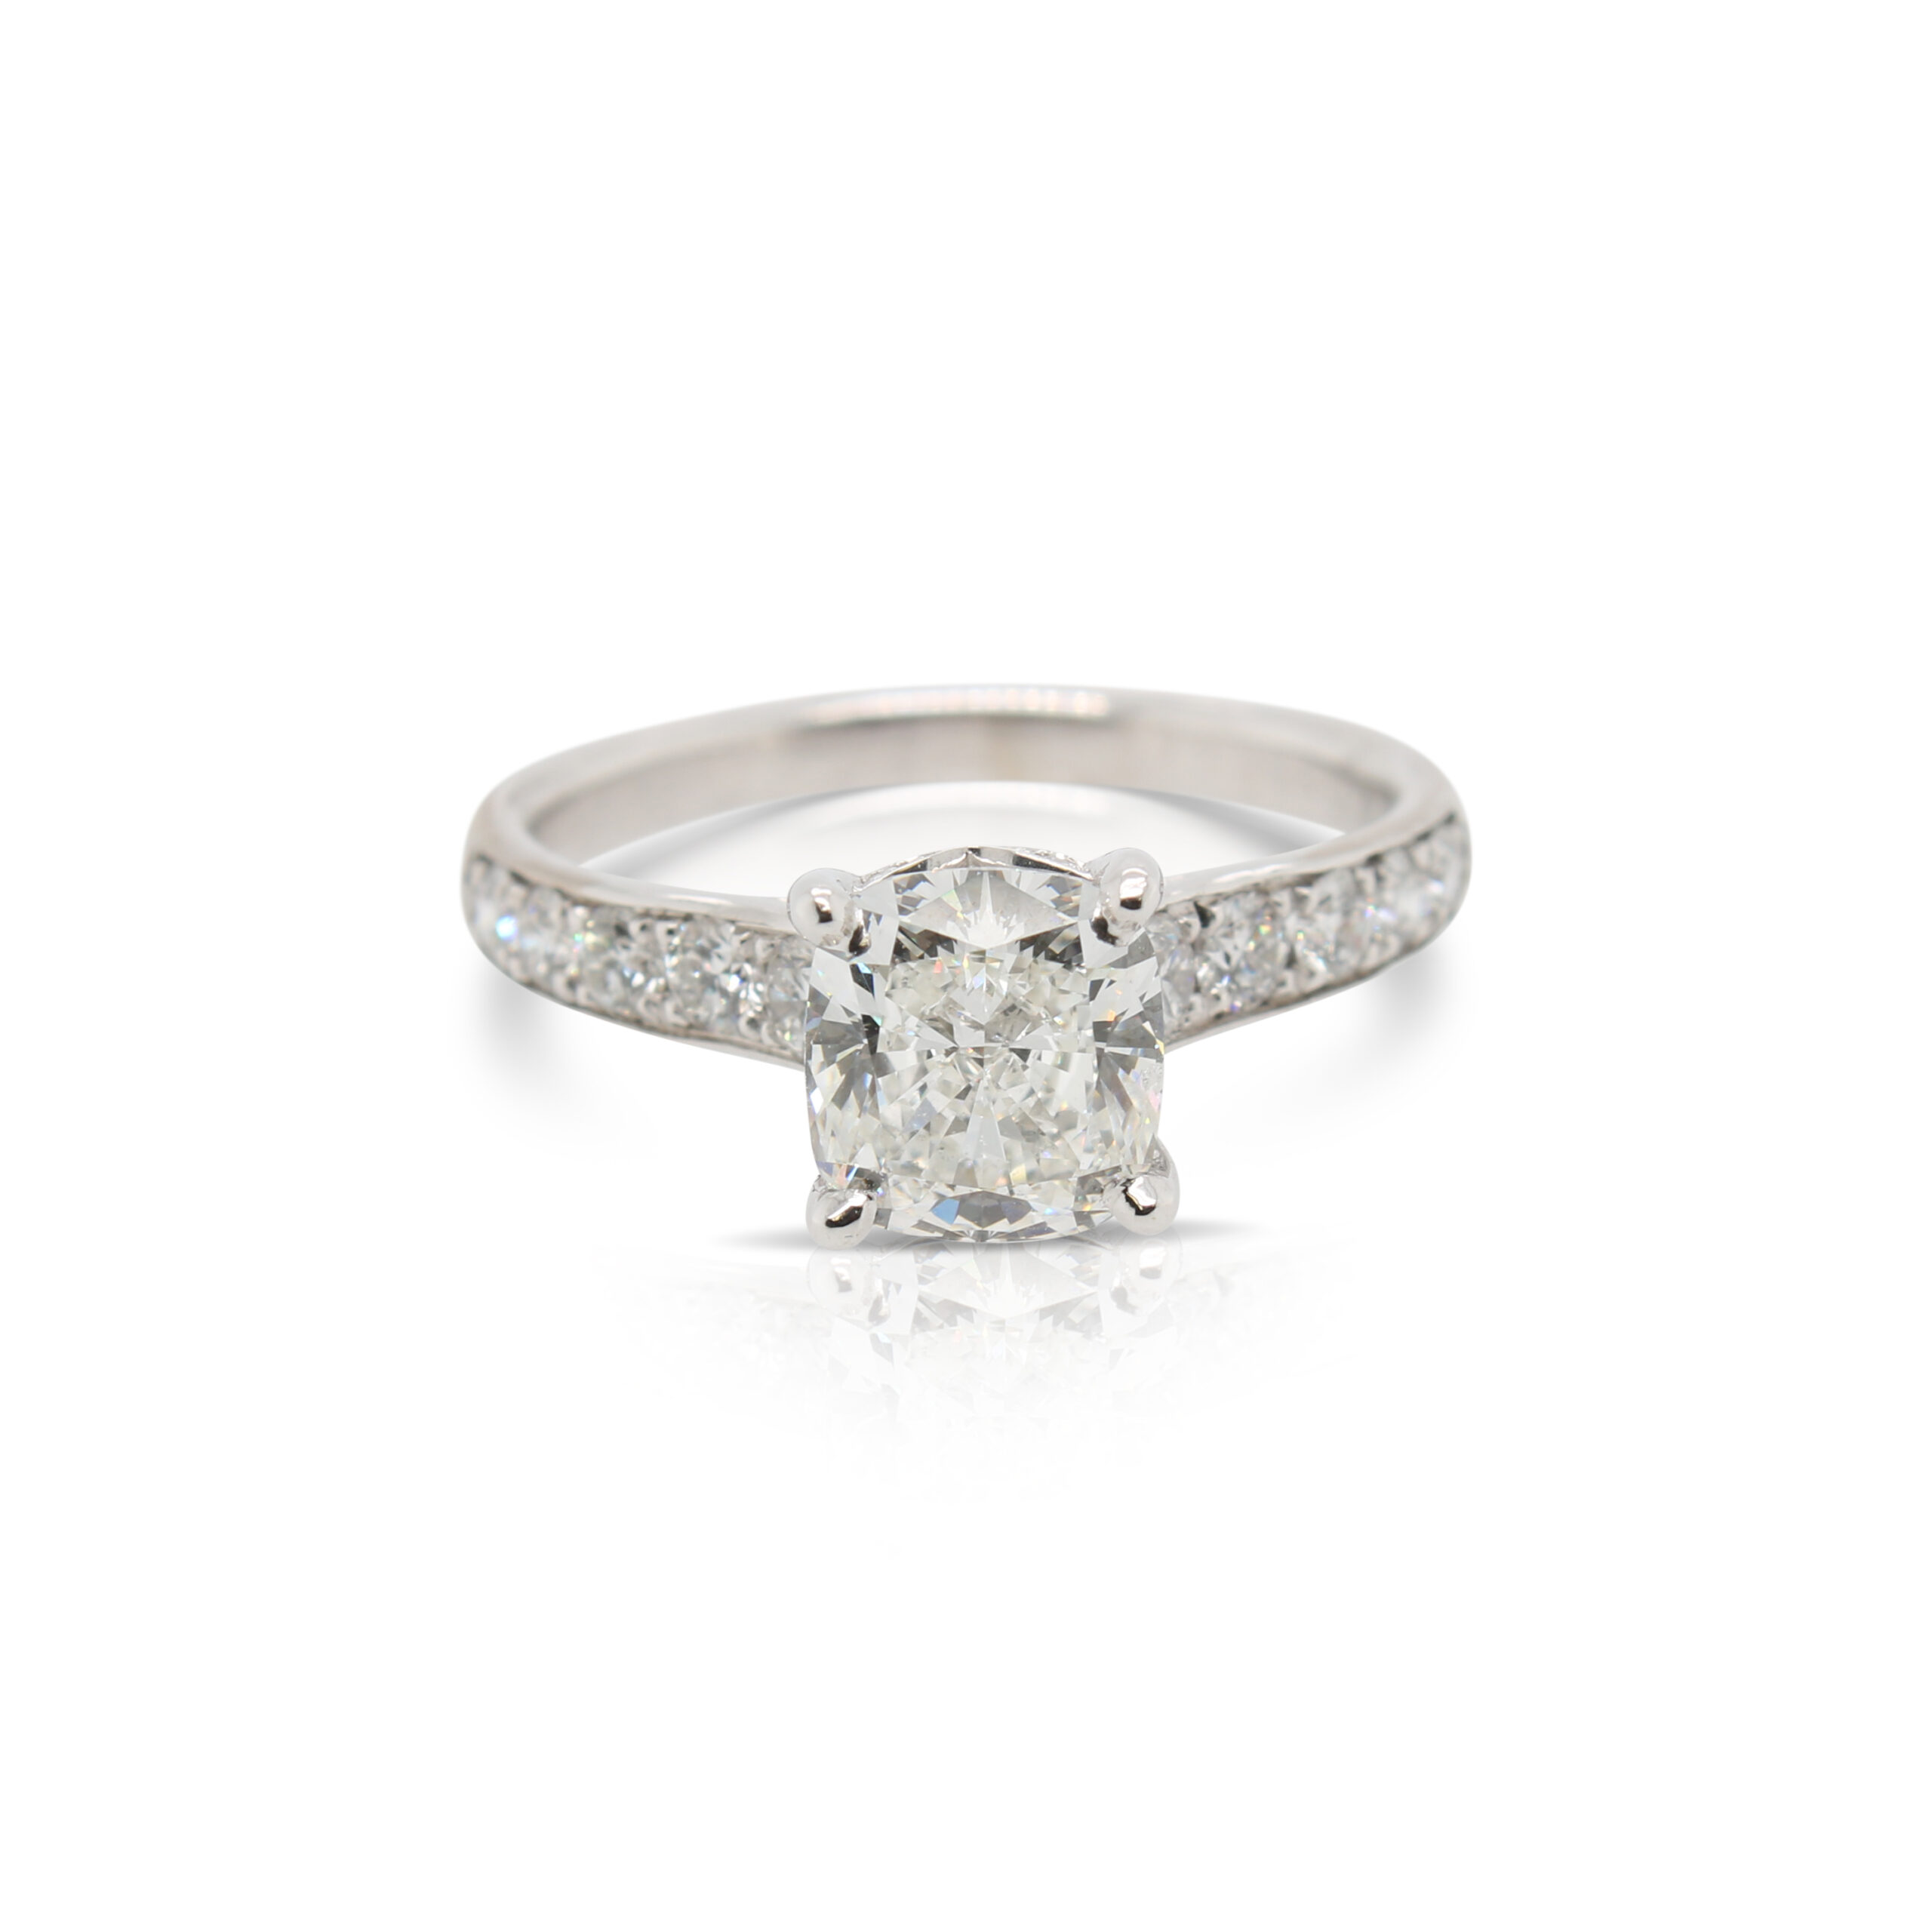 012255Cushion-Shaped-Diamond-Engagement-Ring.jpg